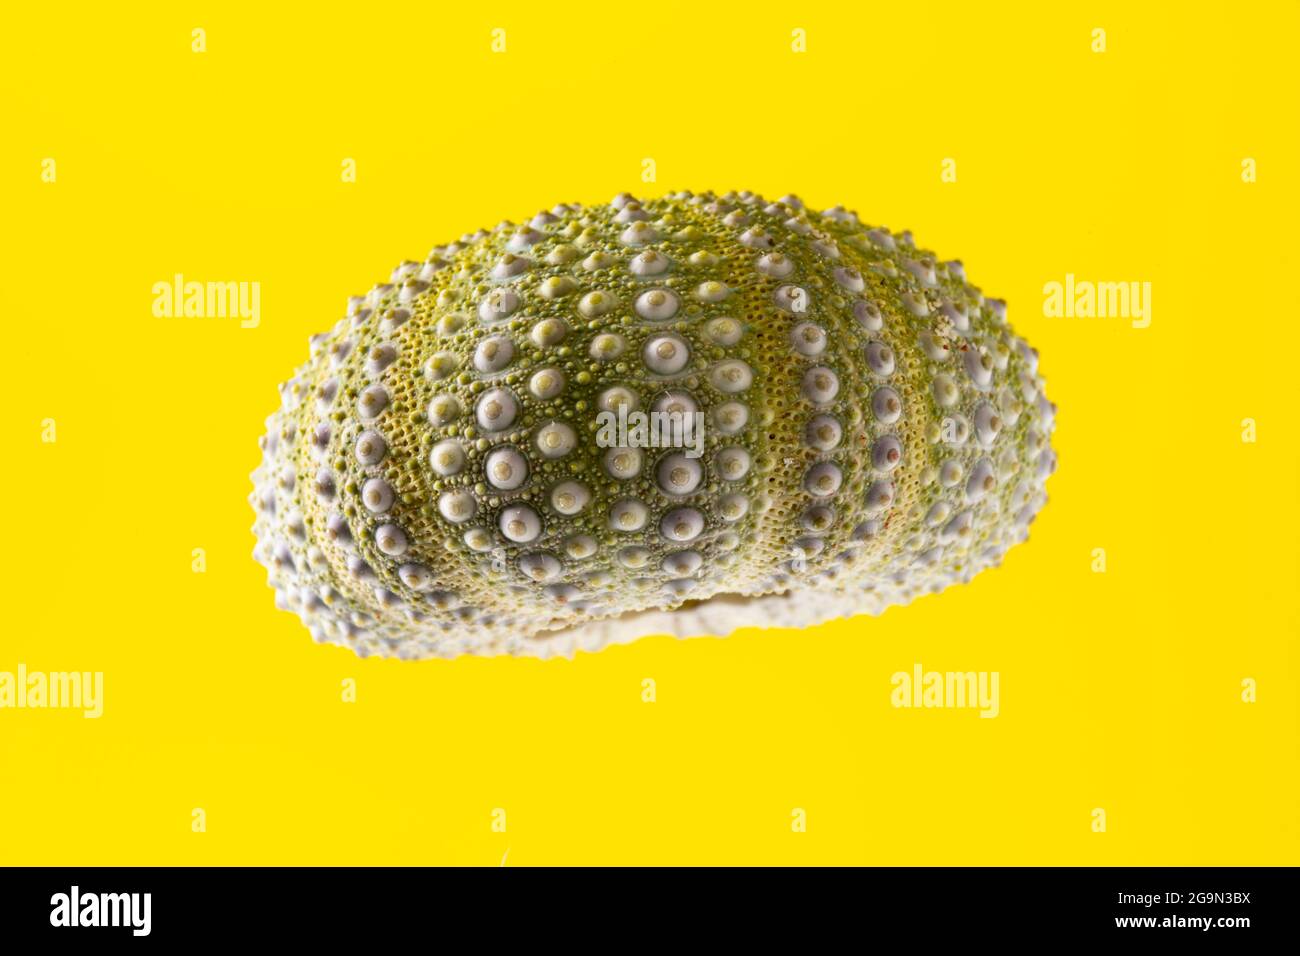 Green dead sea urchin on yellow background Stock Photo